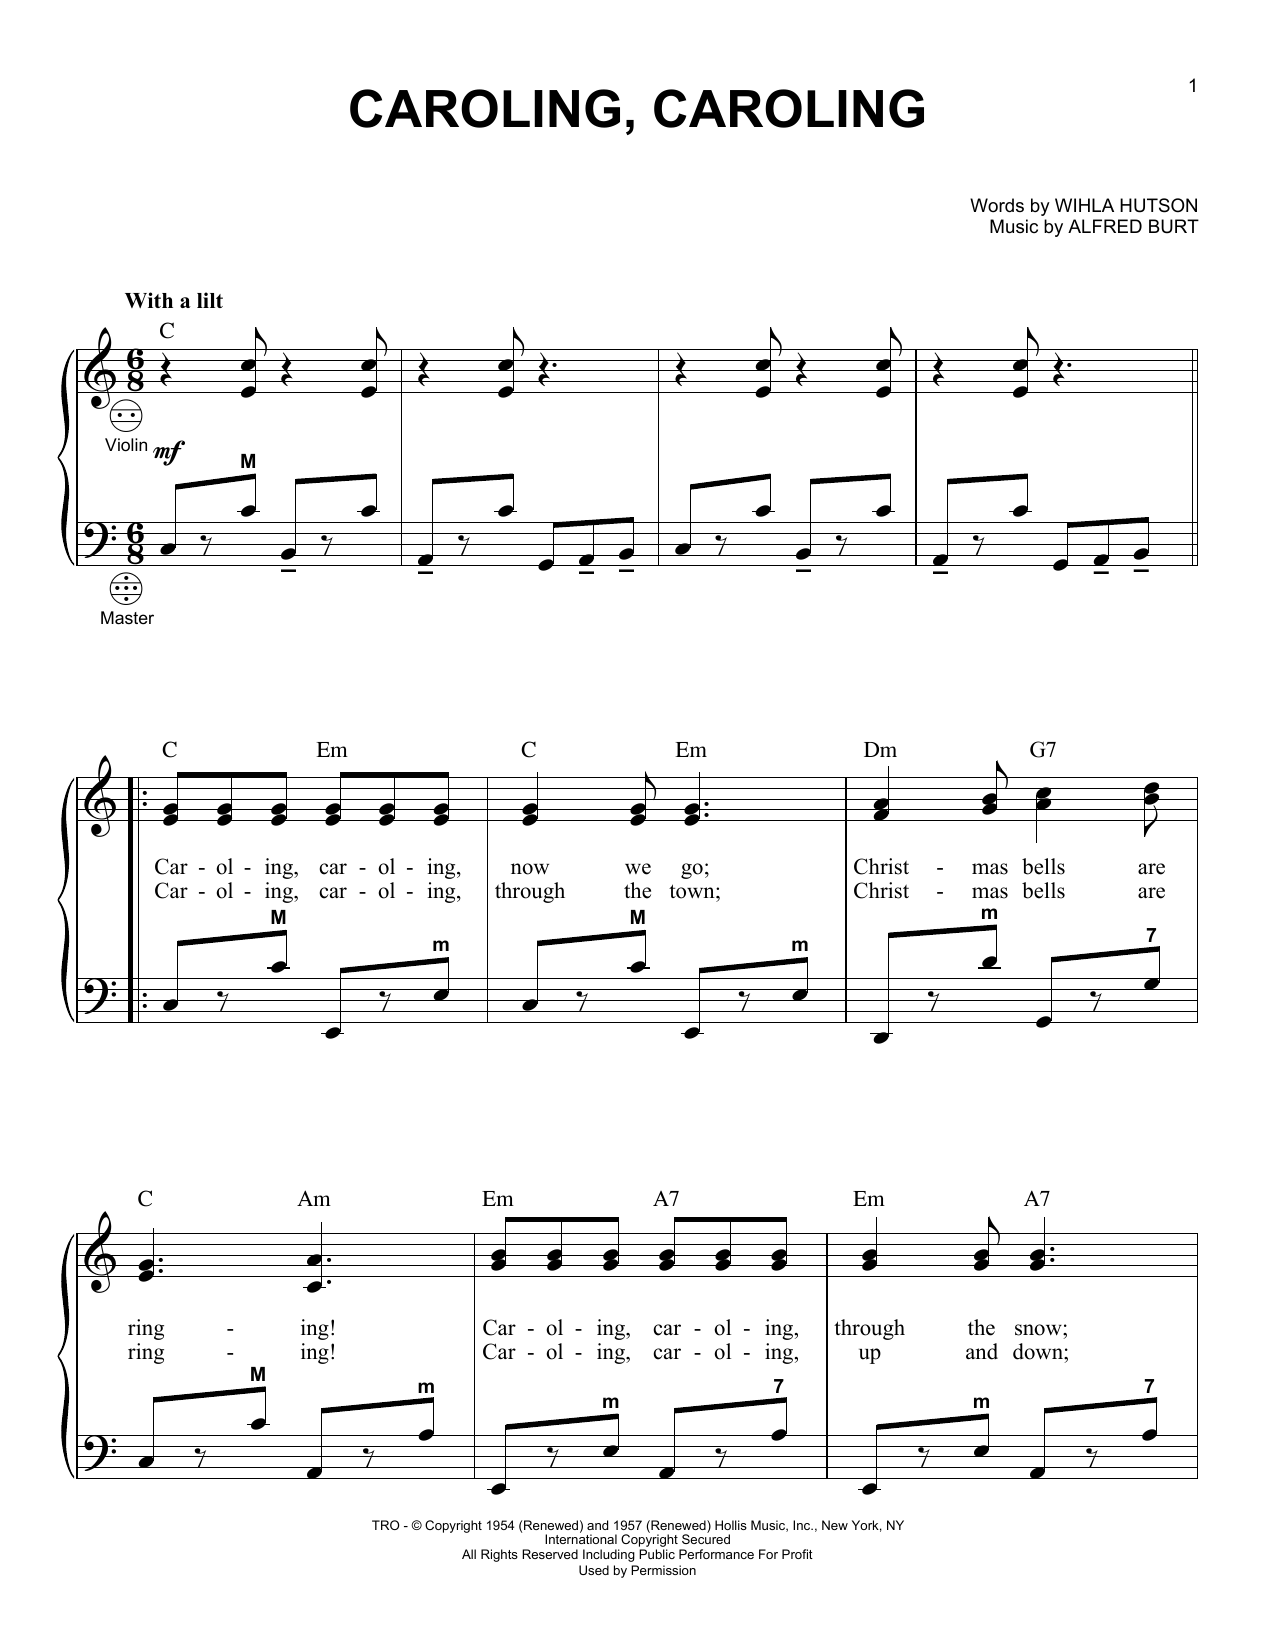 Alfred Burt Caroling, Caroling sheet music notes and chords arranged for 5-Finger Piano